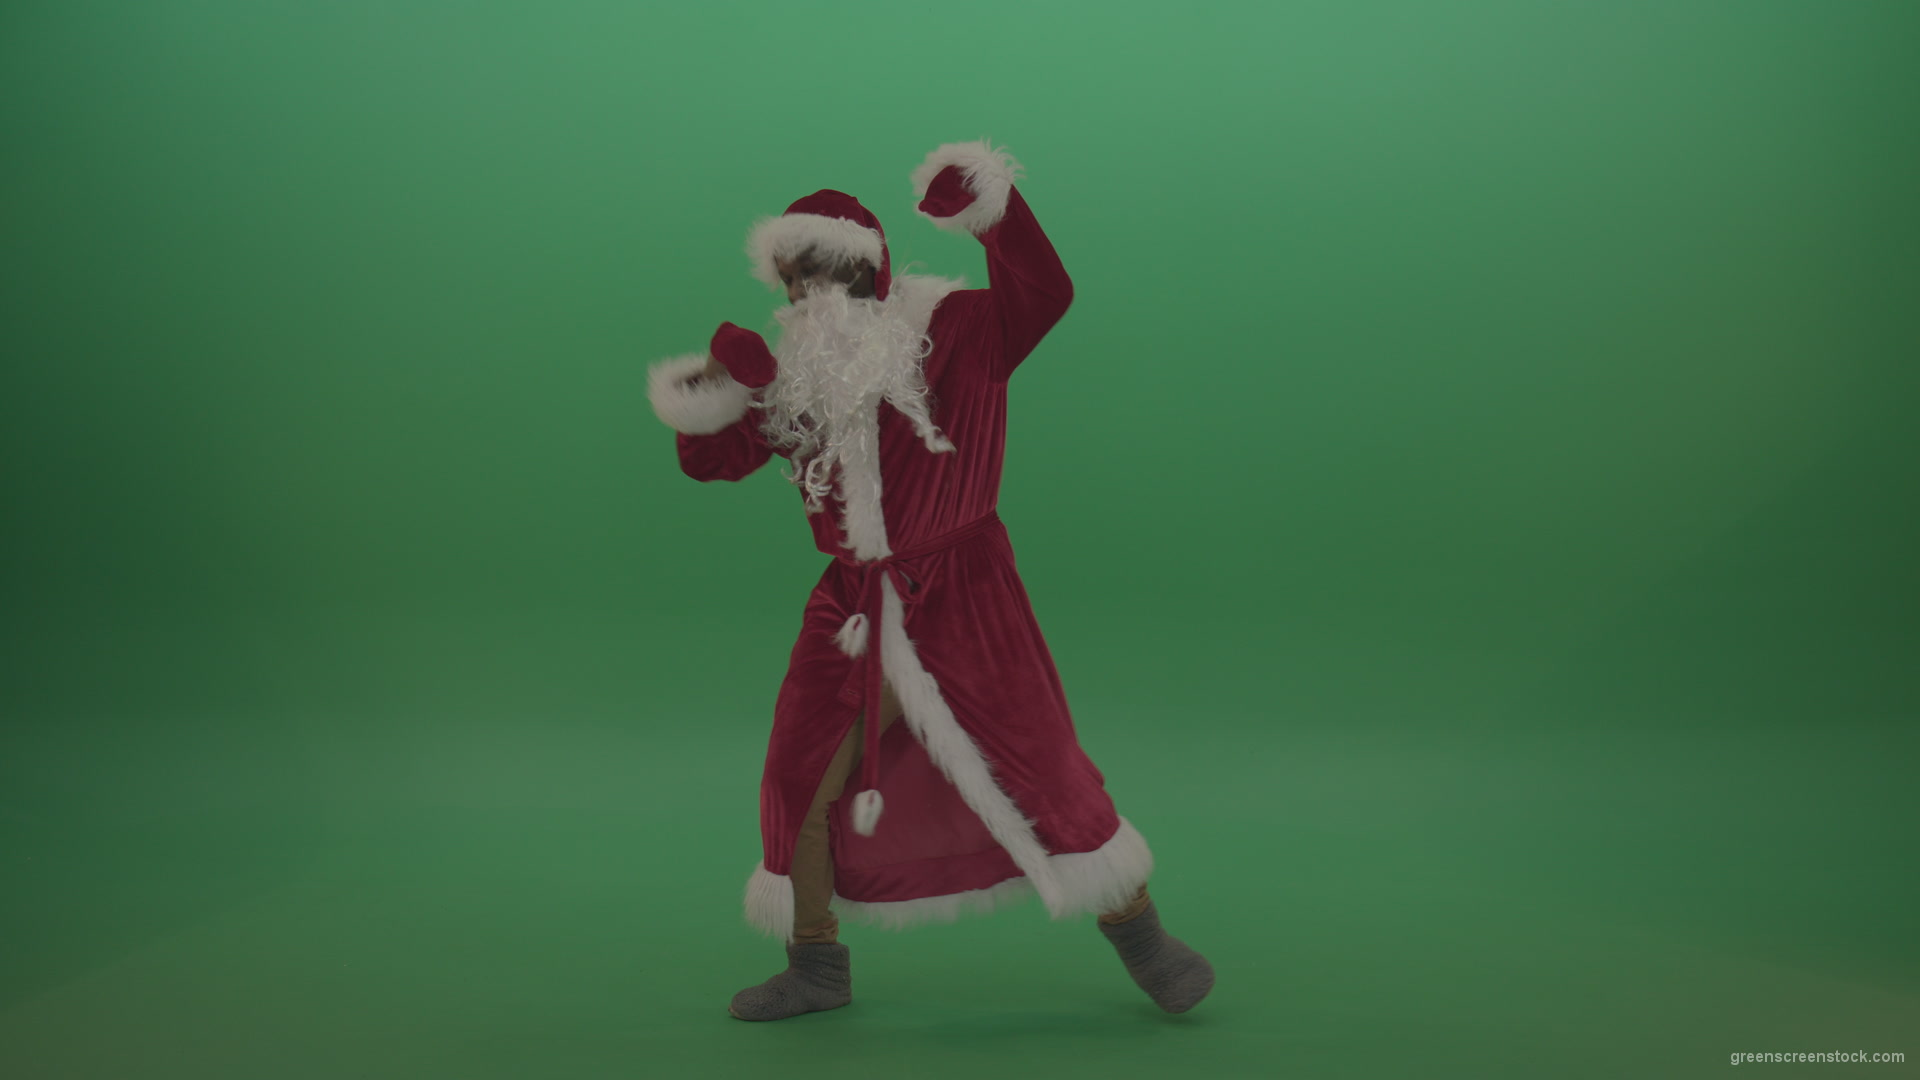 Crazy-santa-moves-over-chromakey-background_009 Green Screen Stock